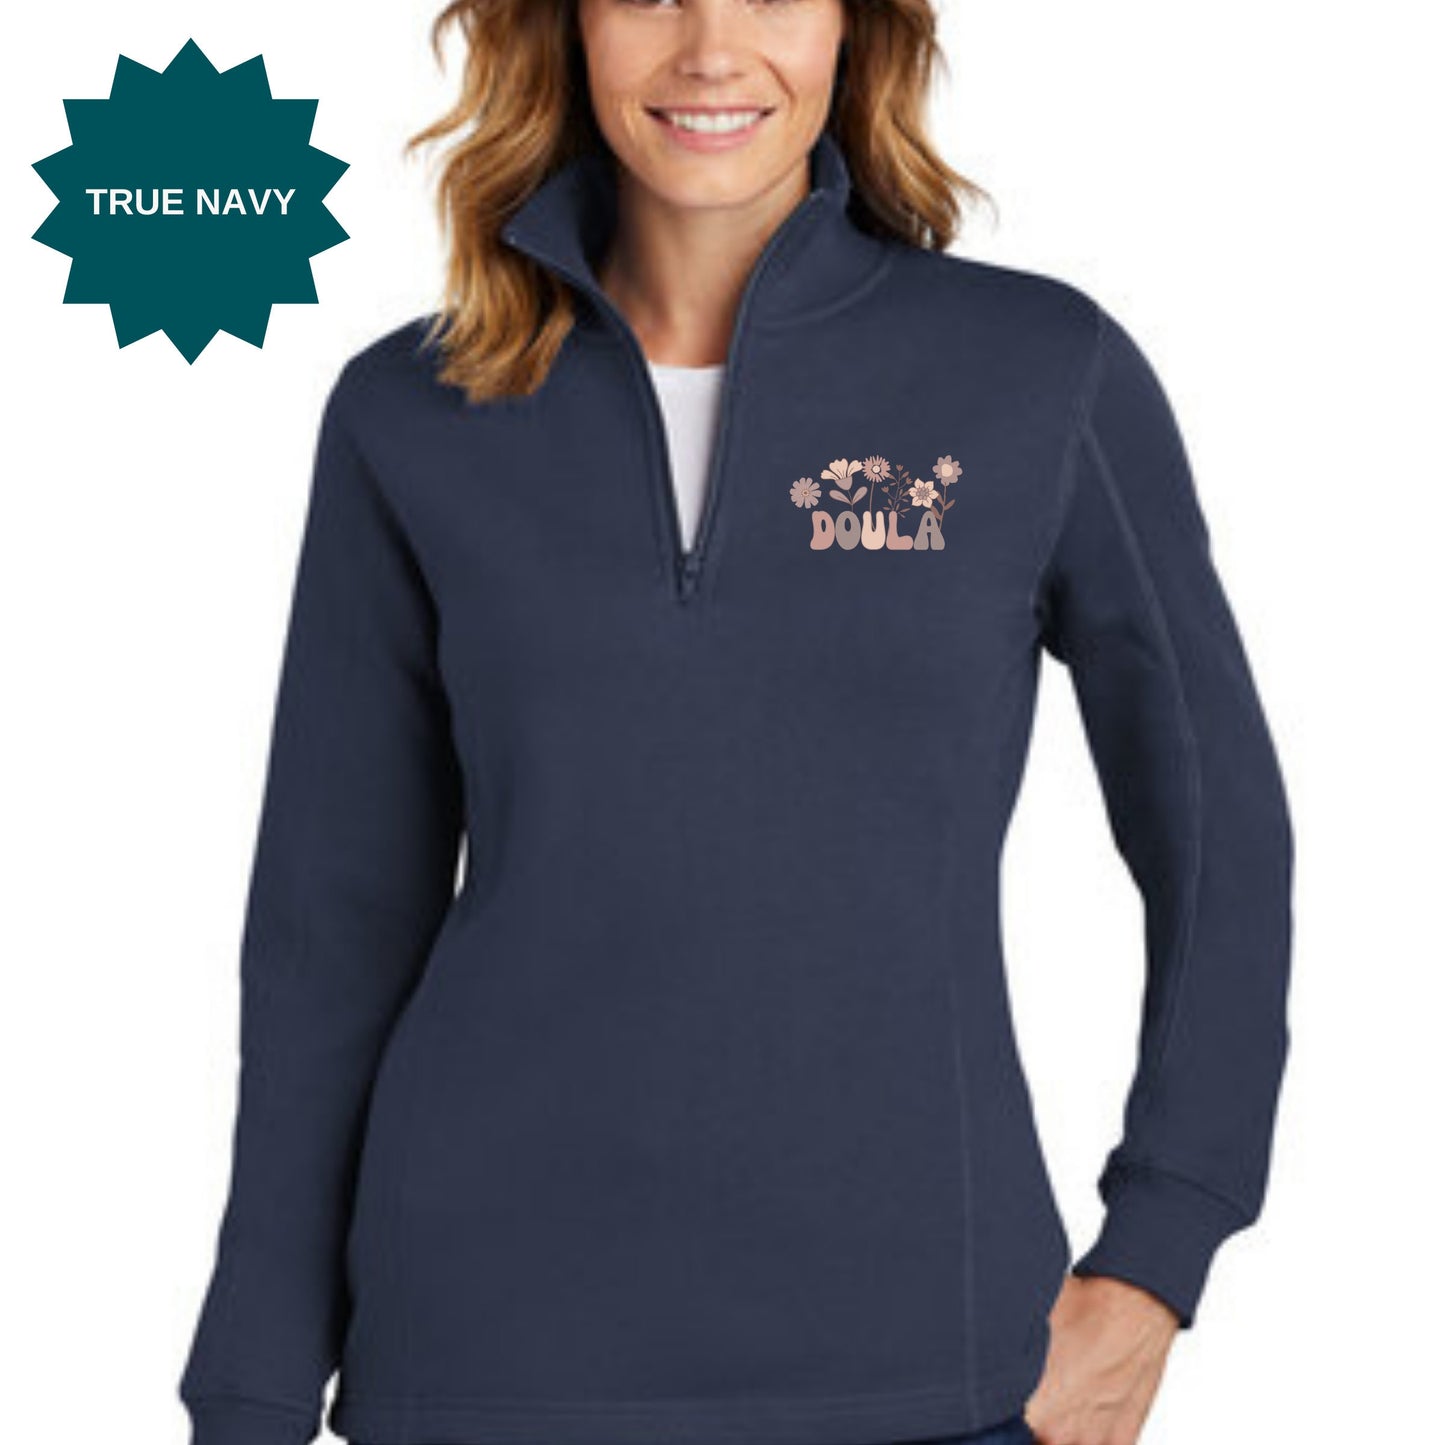 Doula Sweatshirt, Doula Gift, Doula Business, Womens 1/4 Zip LST253 Pullover - Mardonyx Sweatshirt True Navy / X-Small